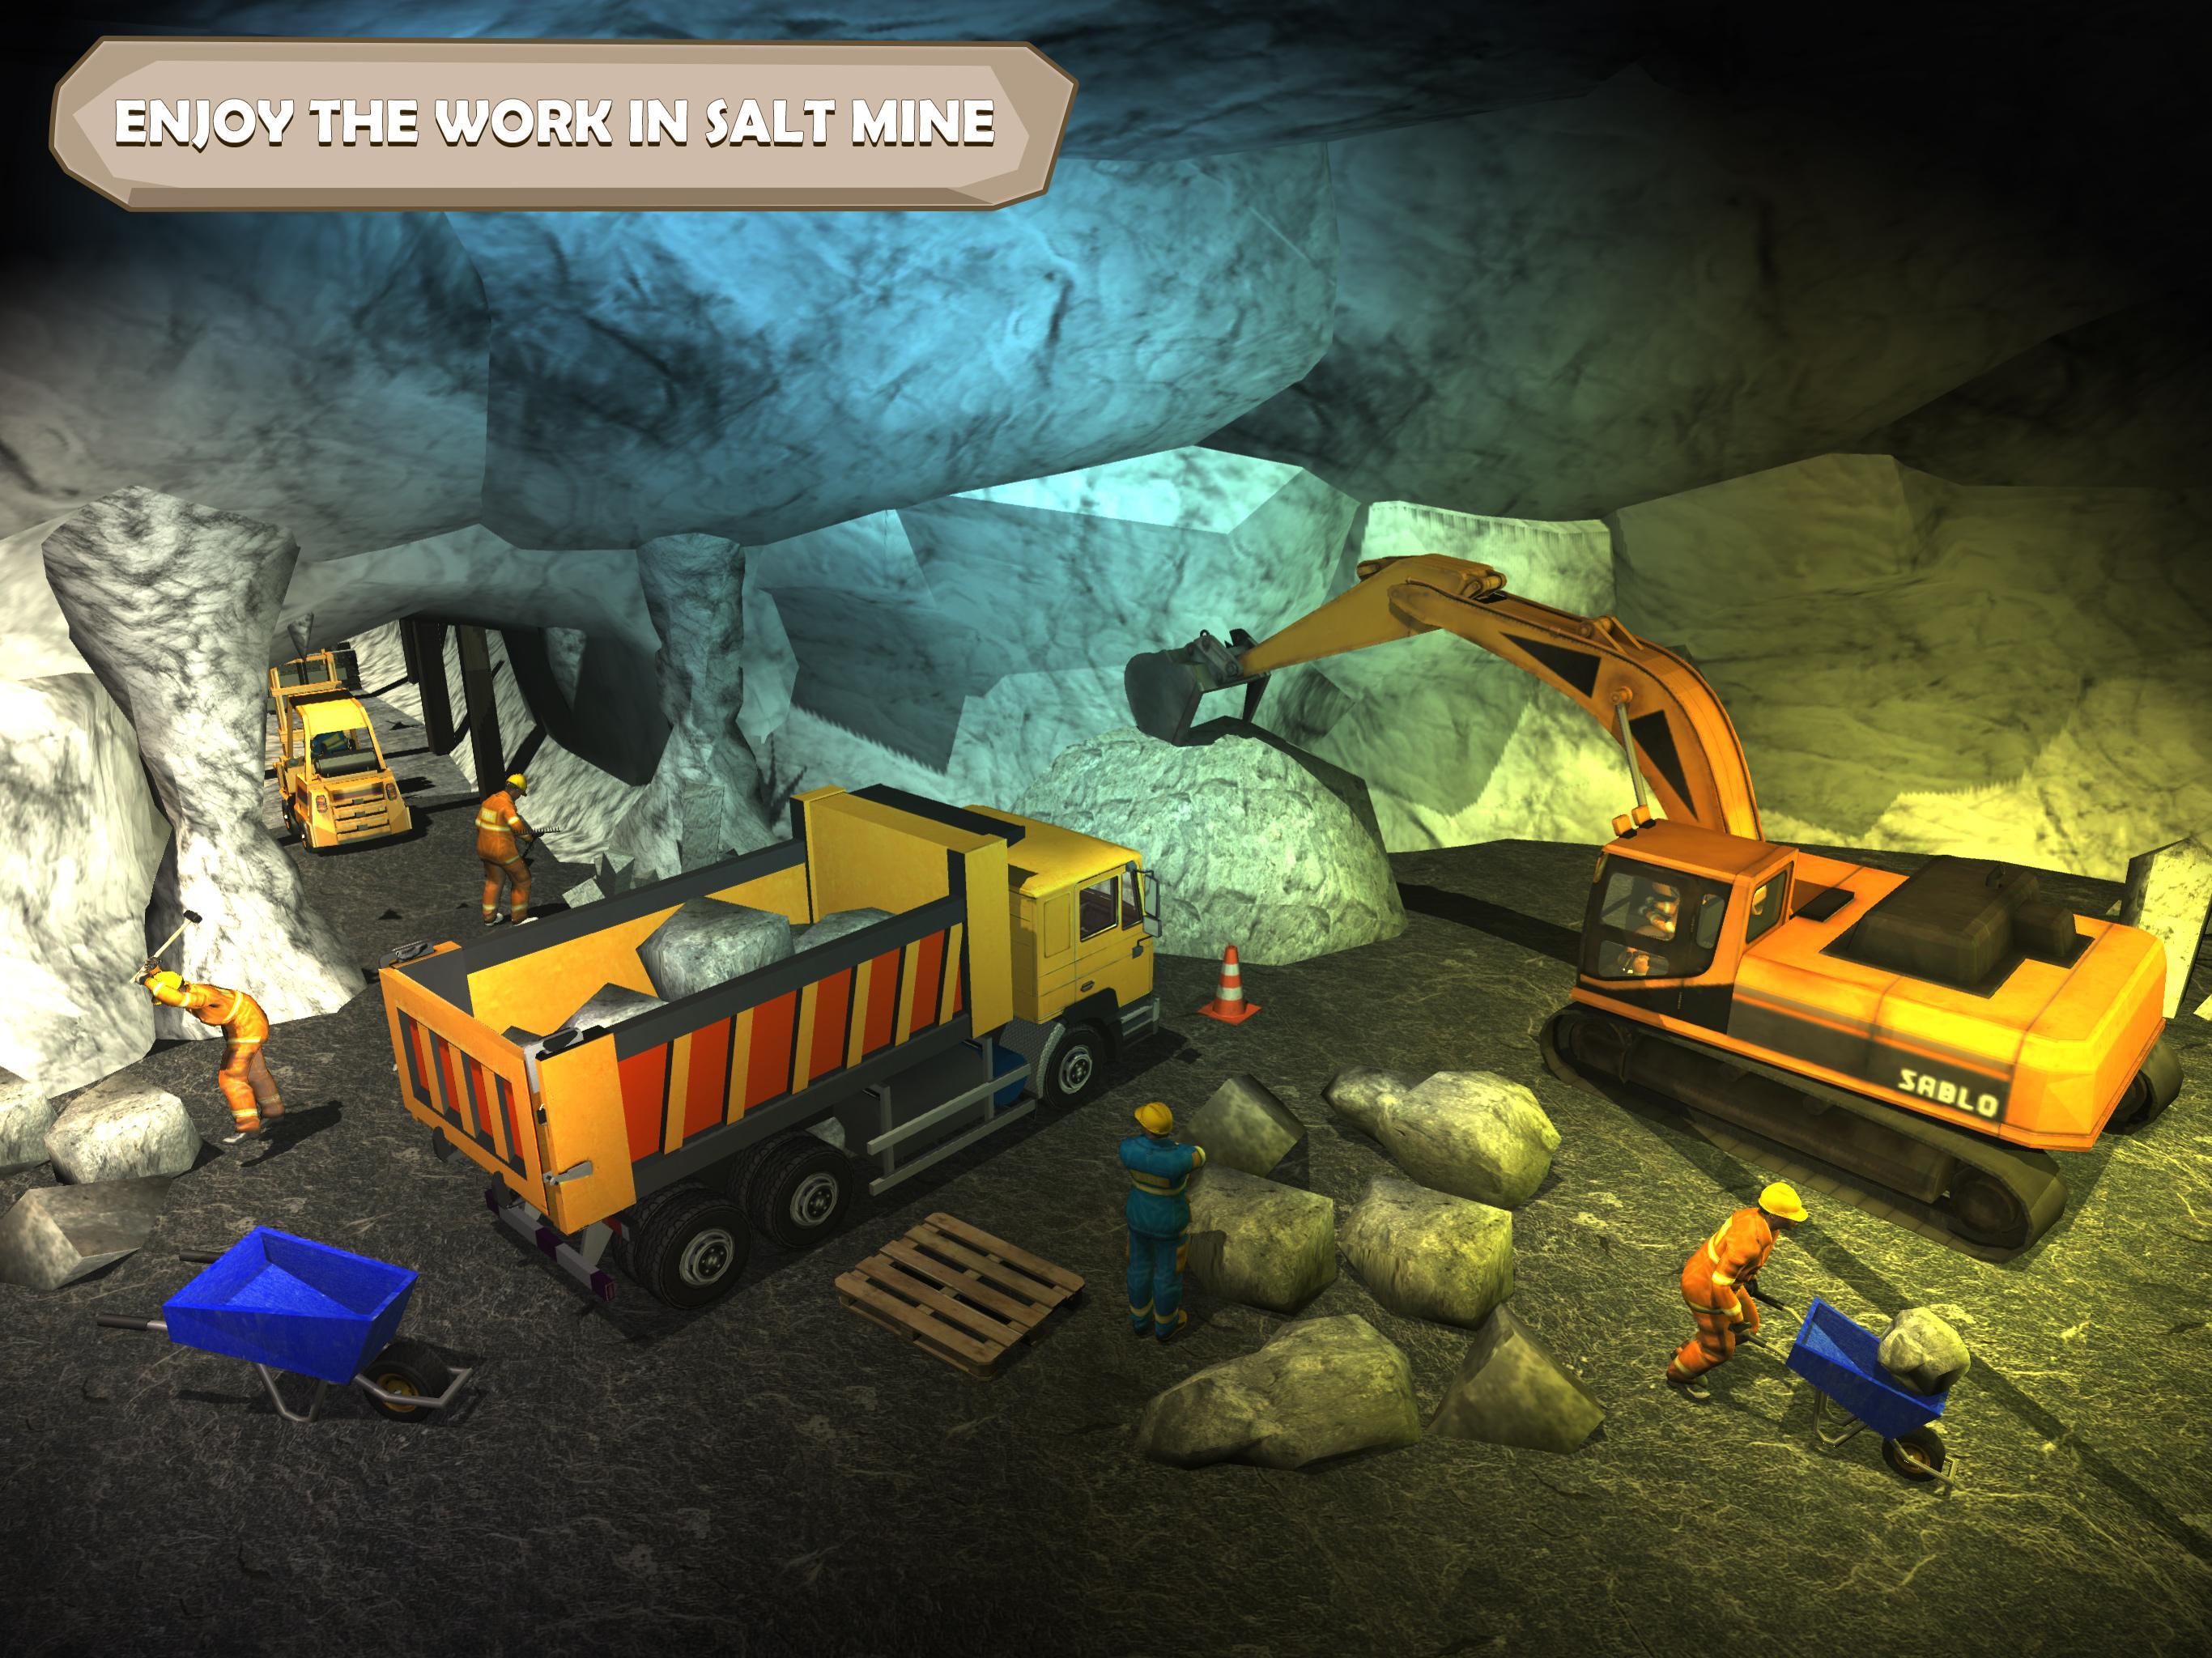 Mining and gaming